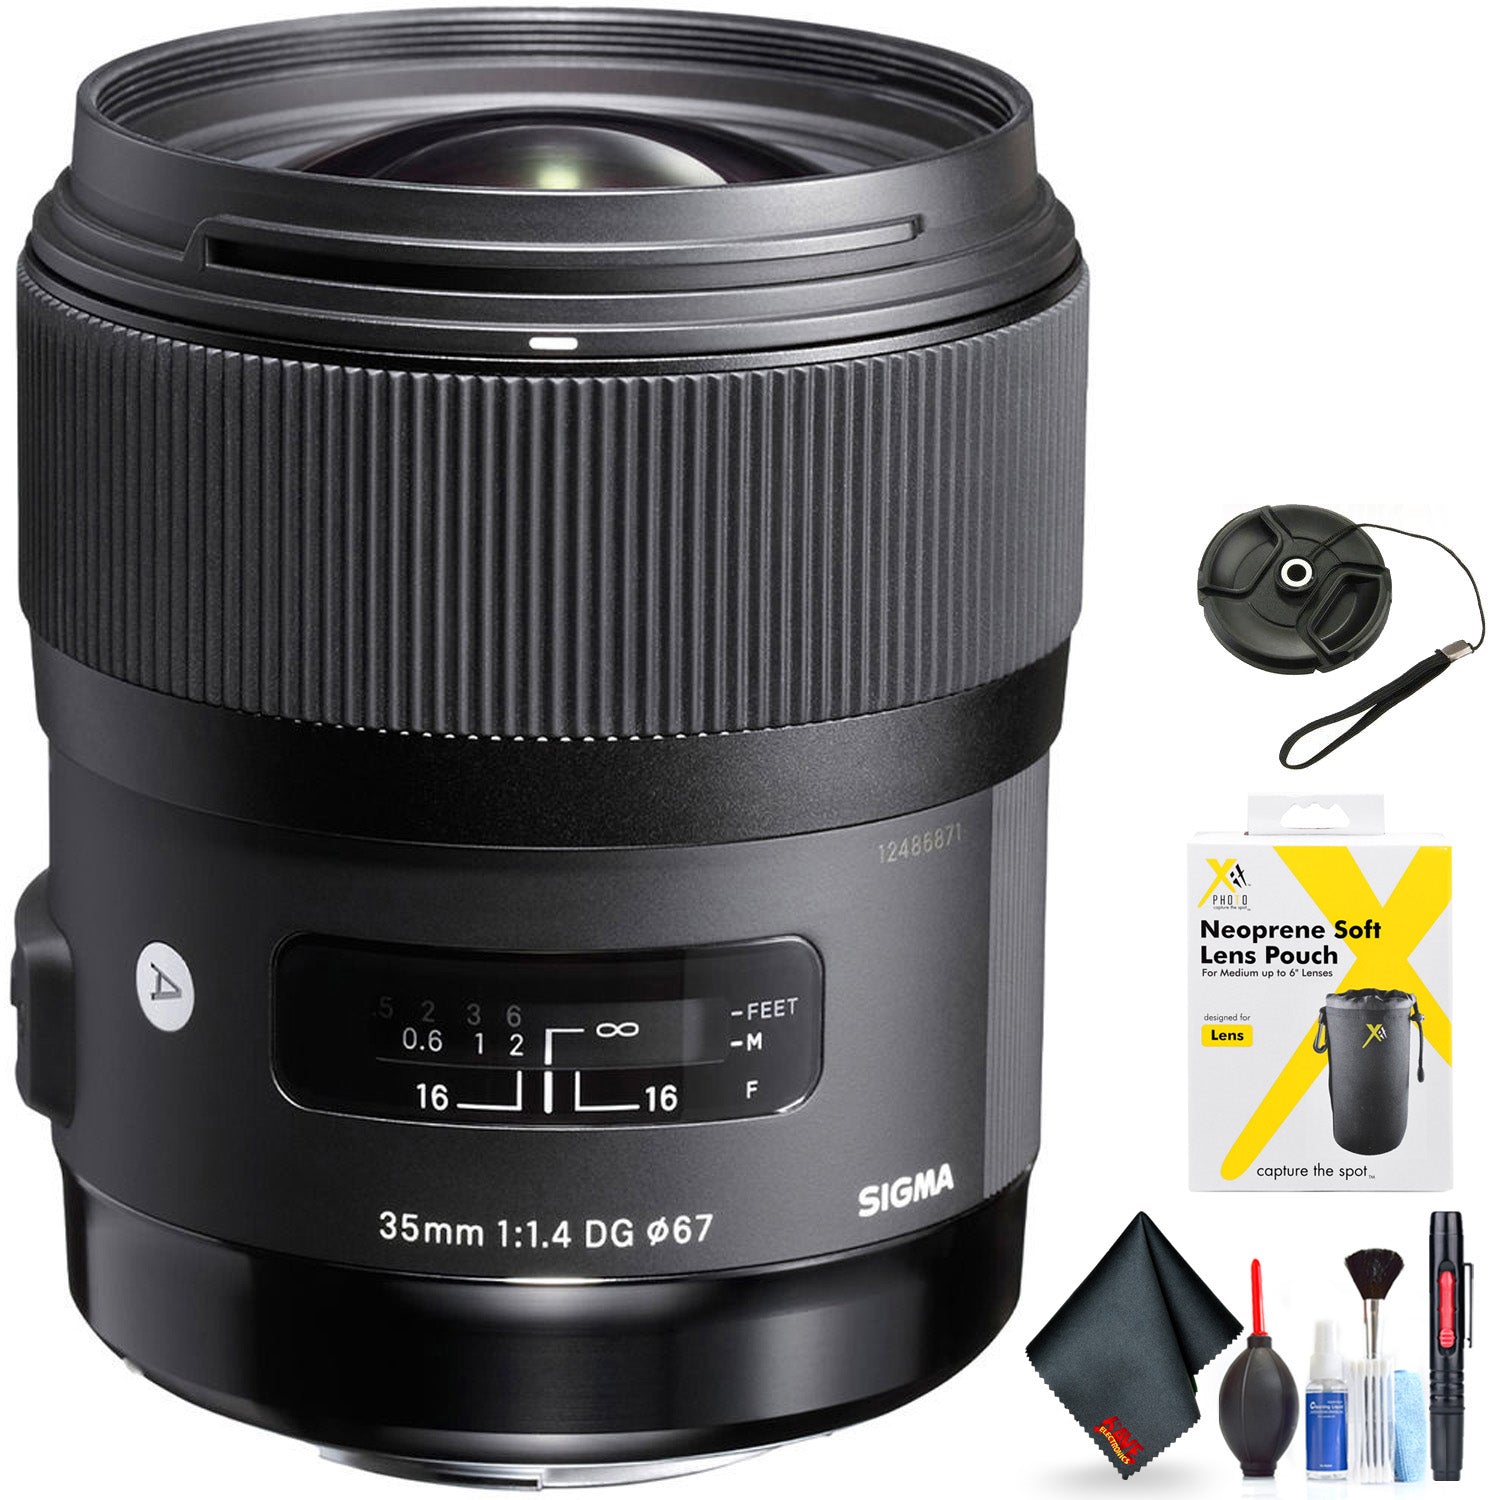 Sigma 35mm f/1.4 DG HSM Art Lens for Nikon F for Nikon F Mount + Accessories (International Model with 2 Year Warranty)